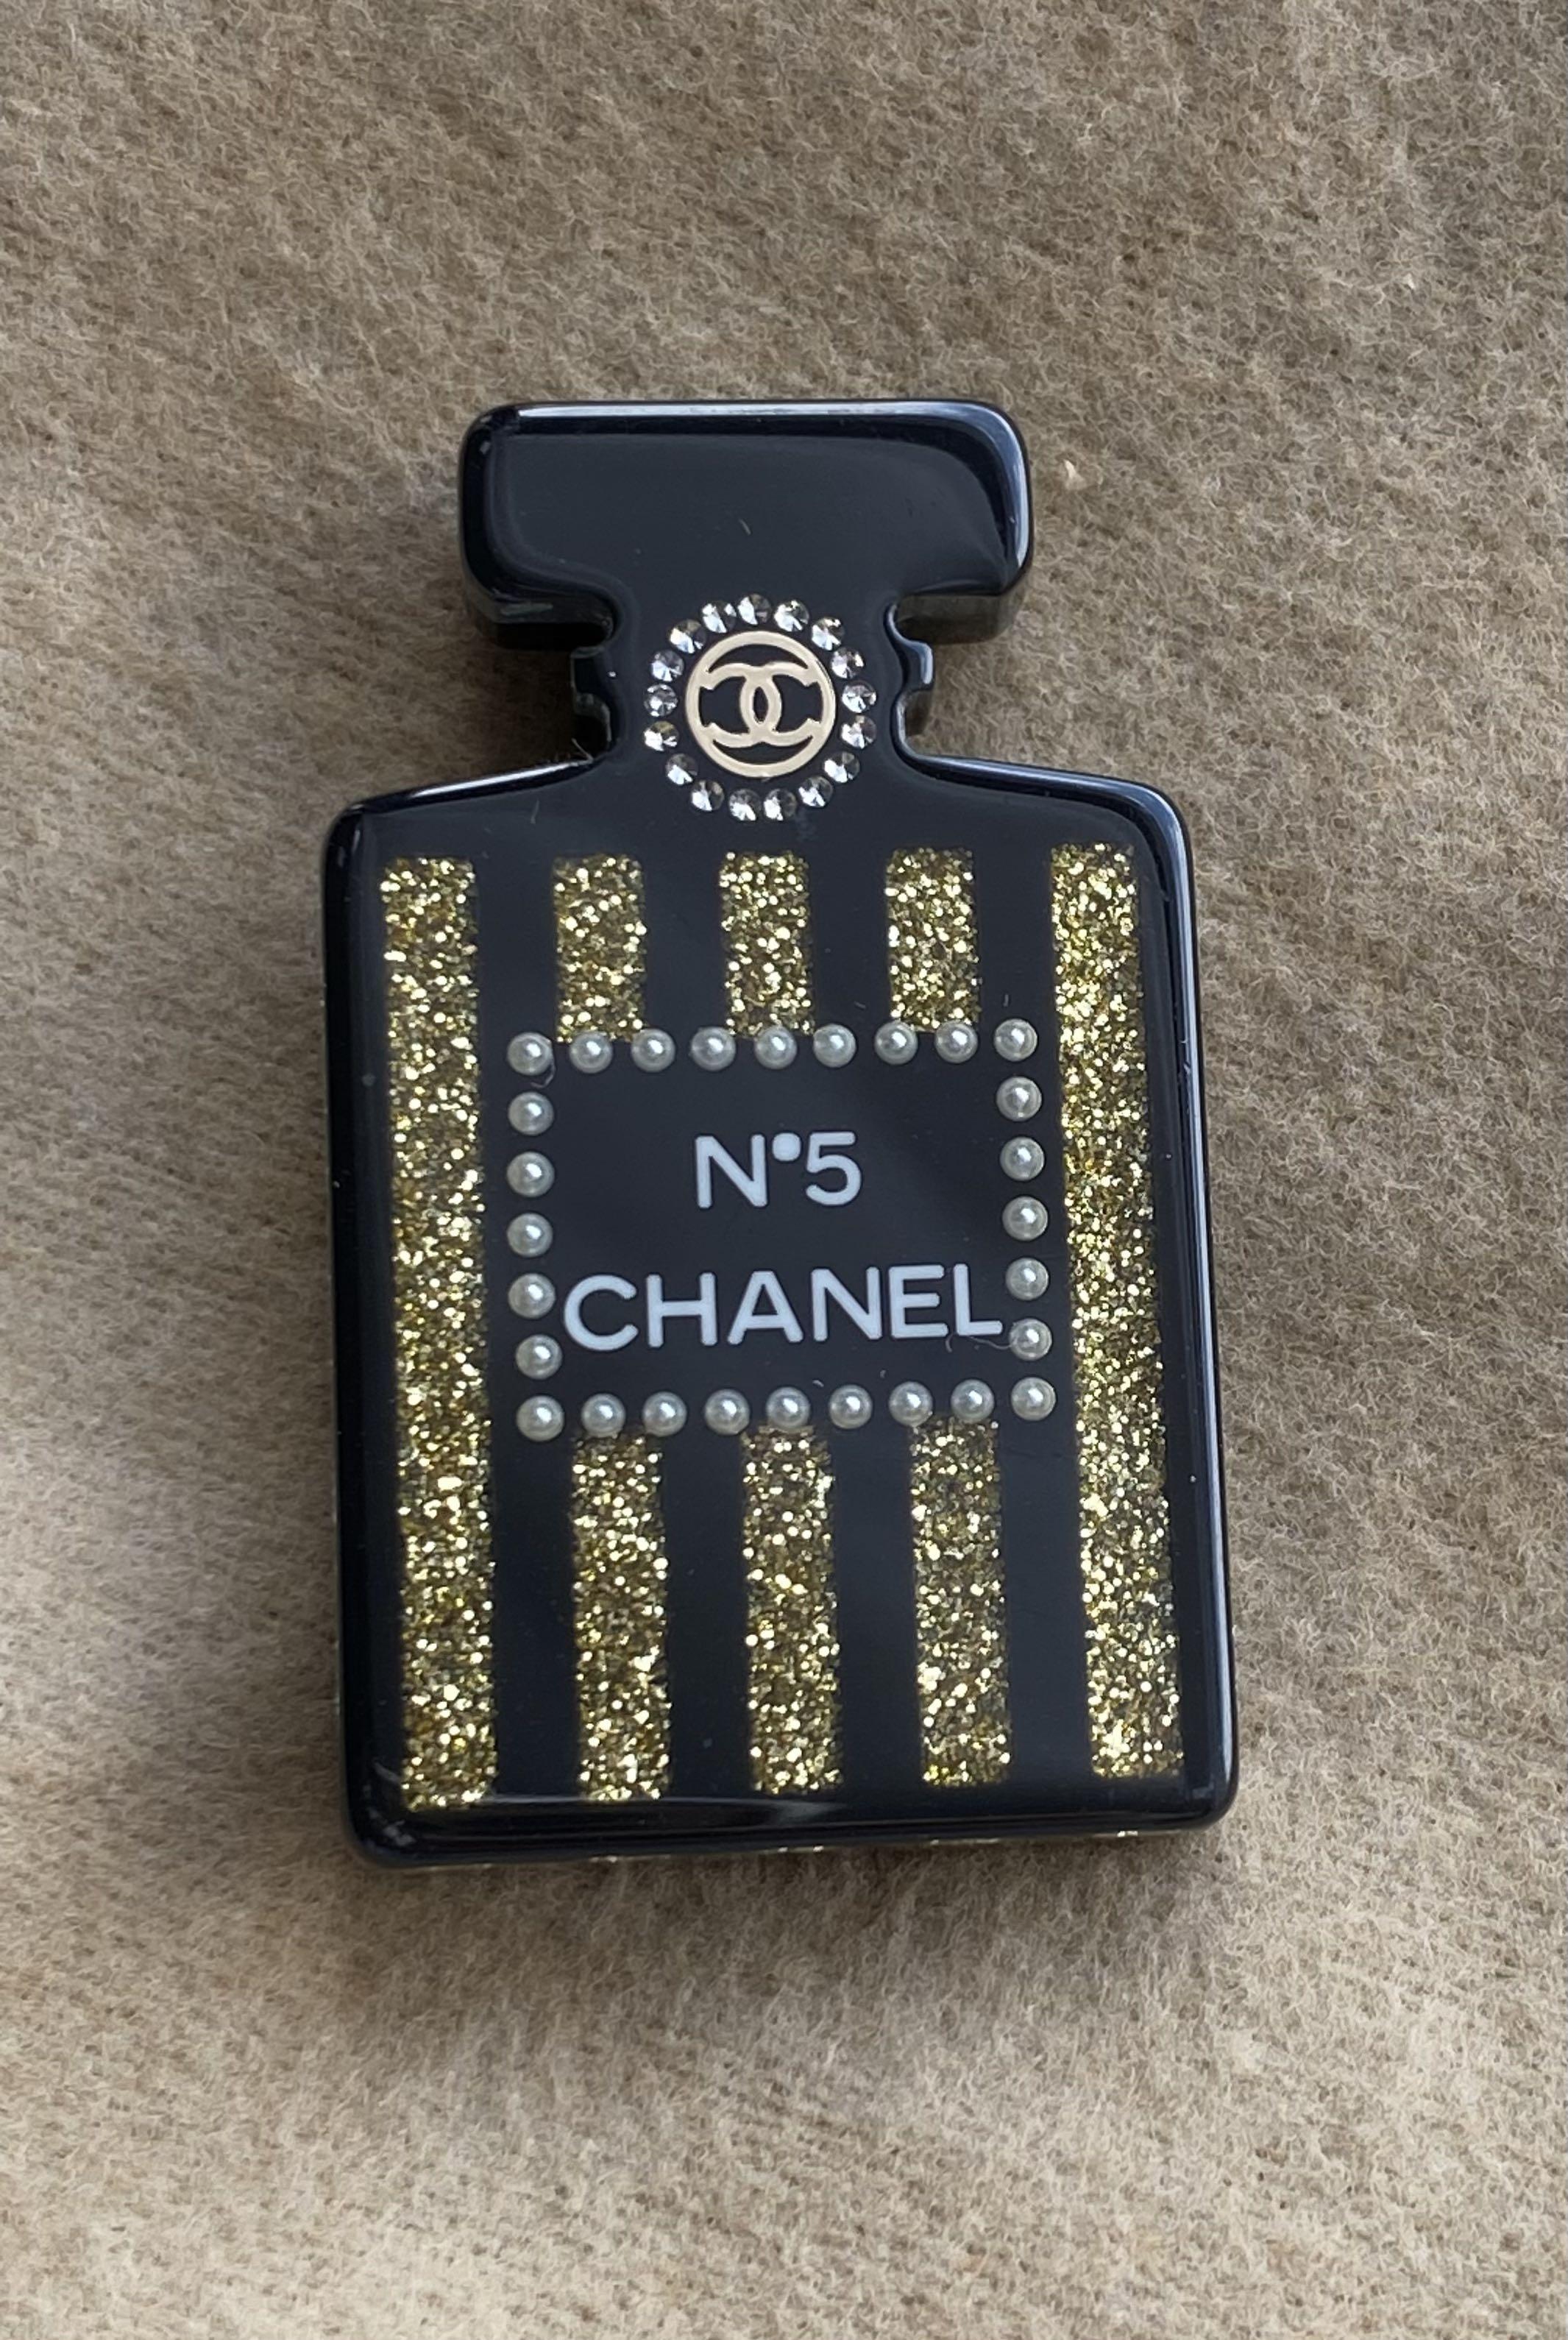 Chanel No. 5 perfume bottle brooch